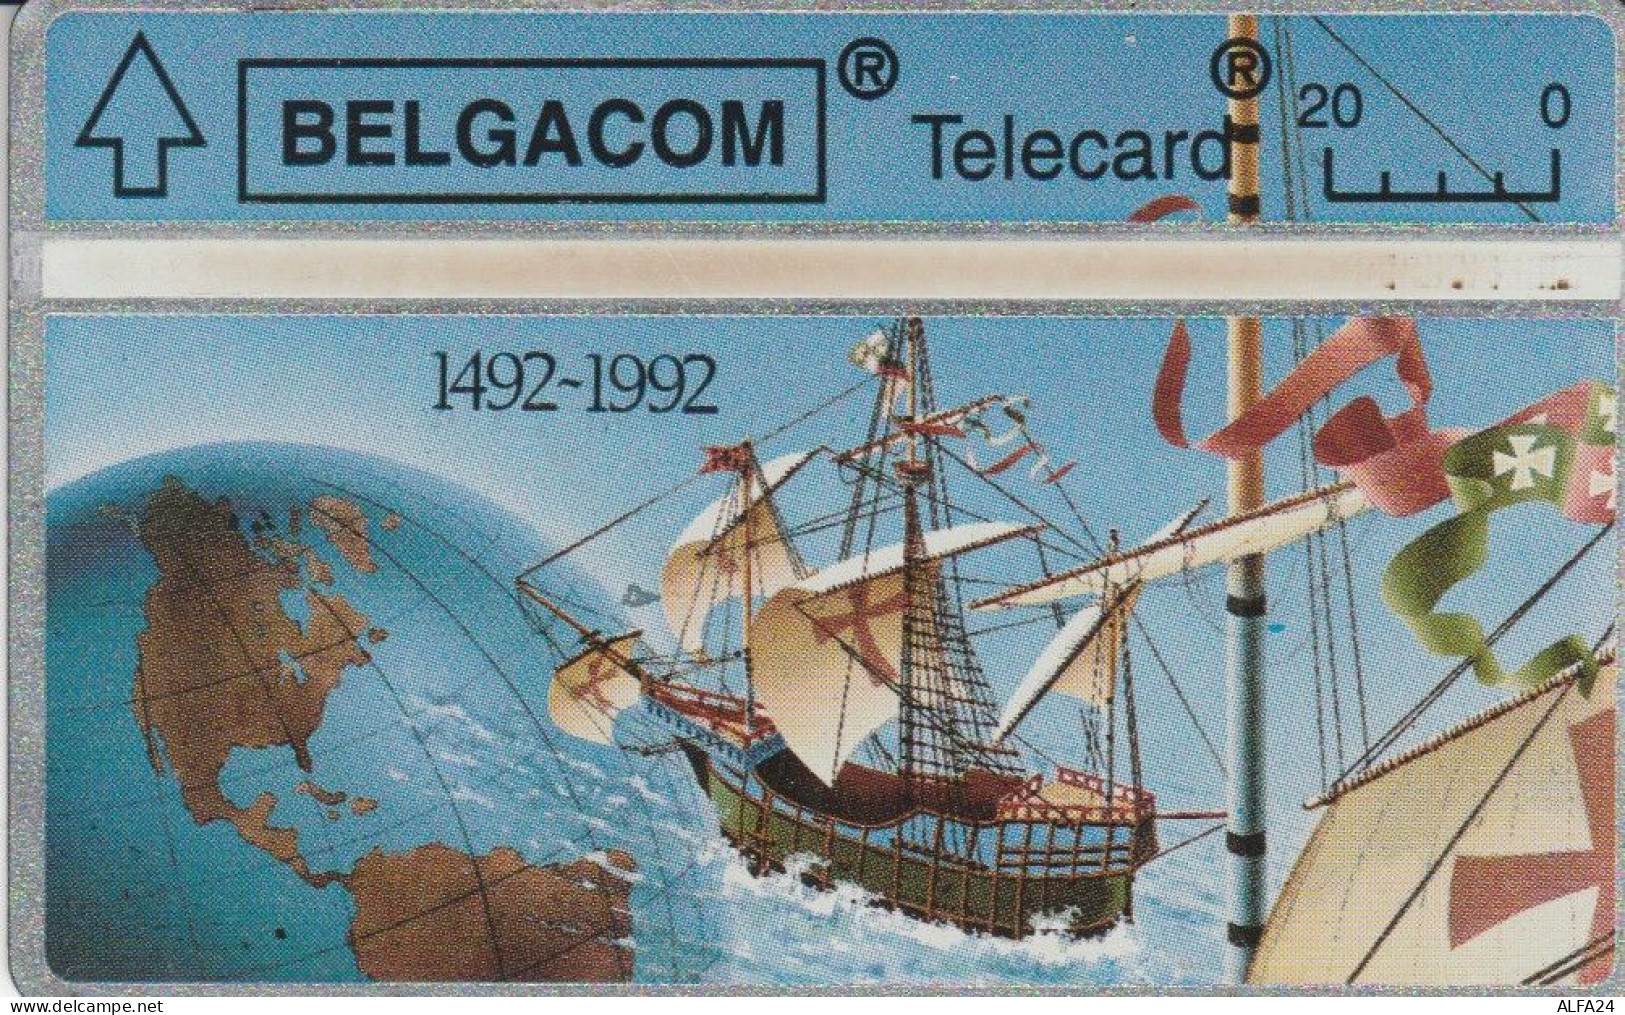 PHONE CARD BELGIO LANDIS (CK5834 - Senza Chip